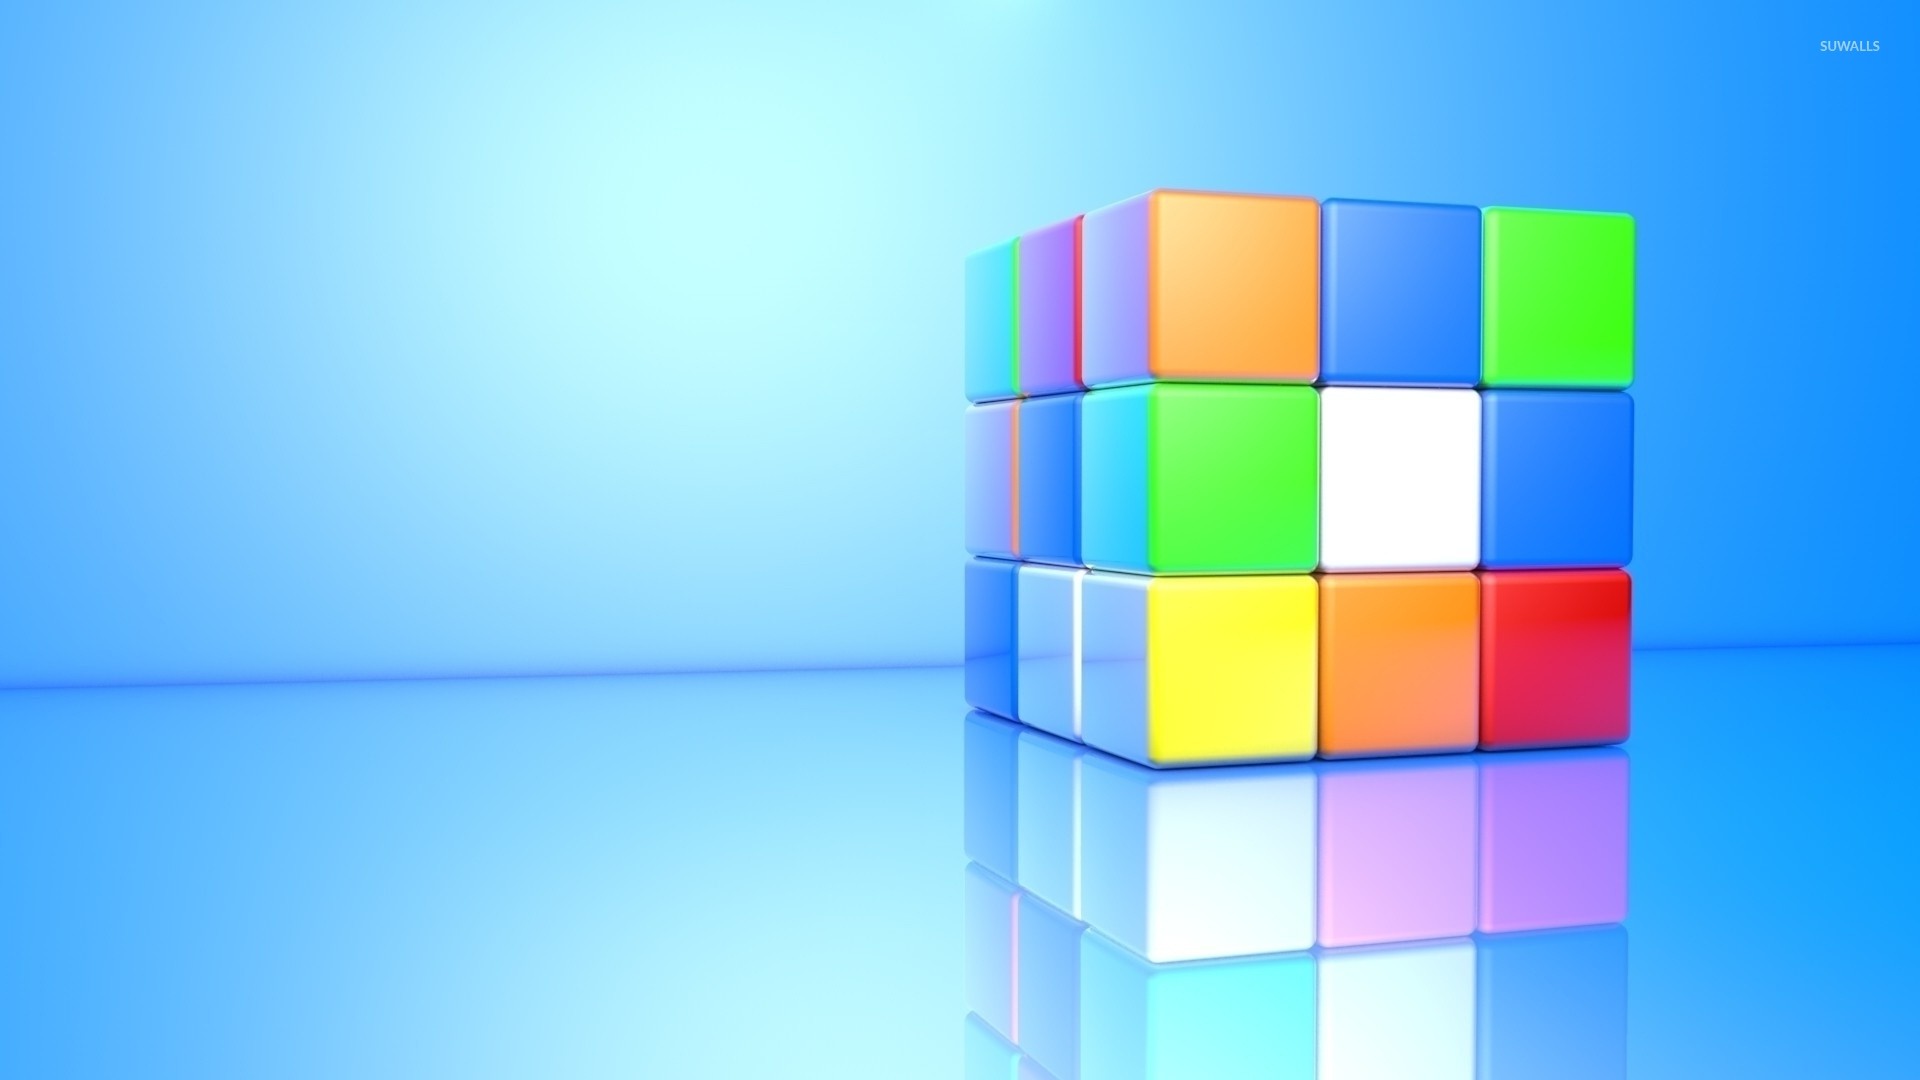 1920x1080 Colorful 3D Rubik's Cube wallpaper  jpg